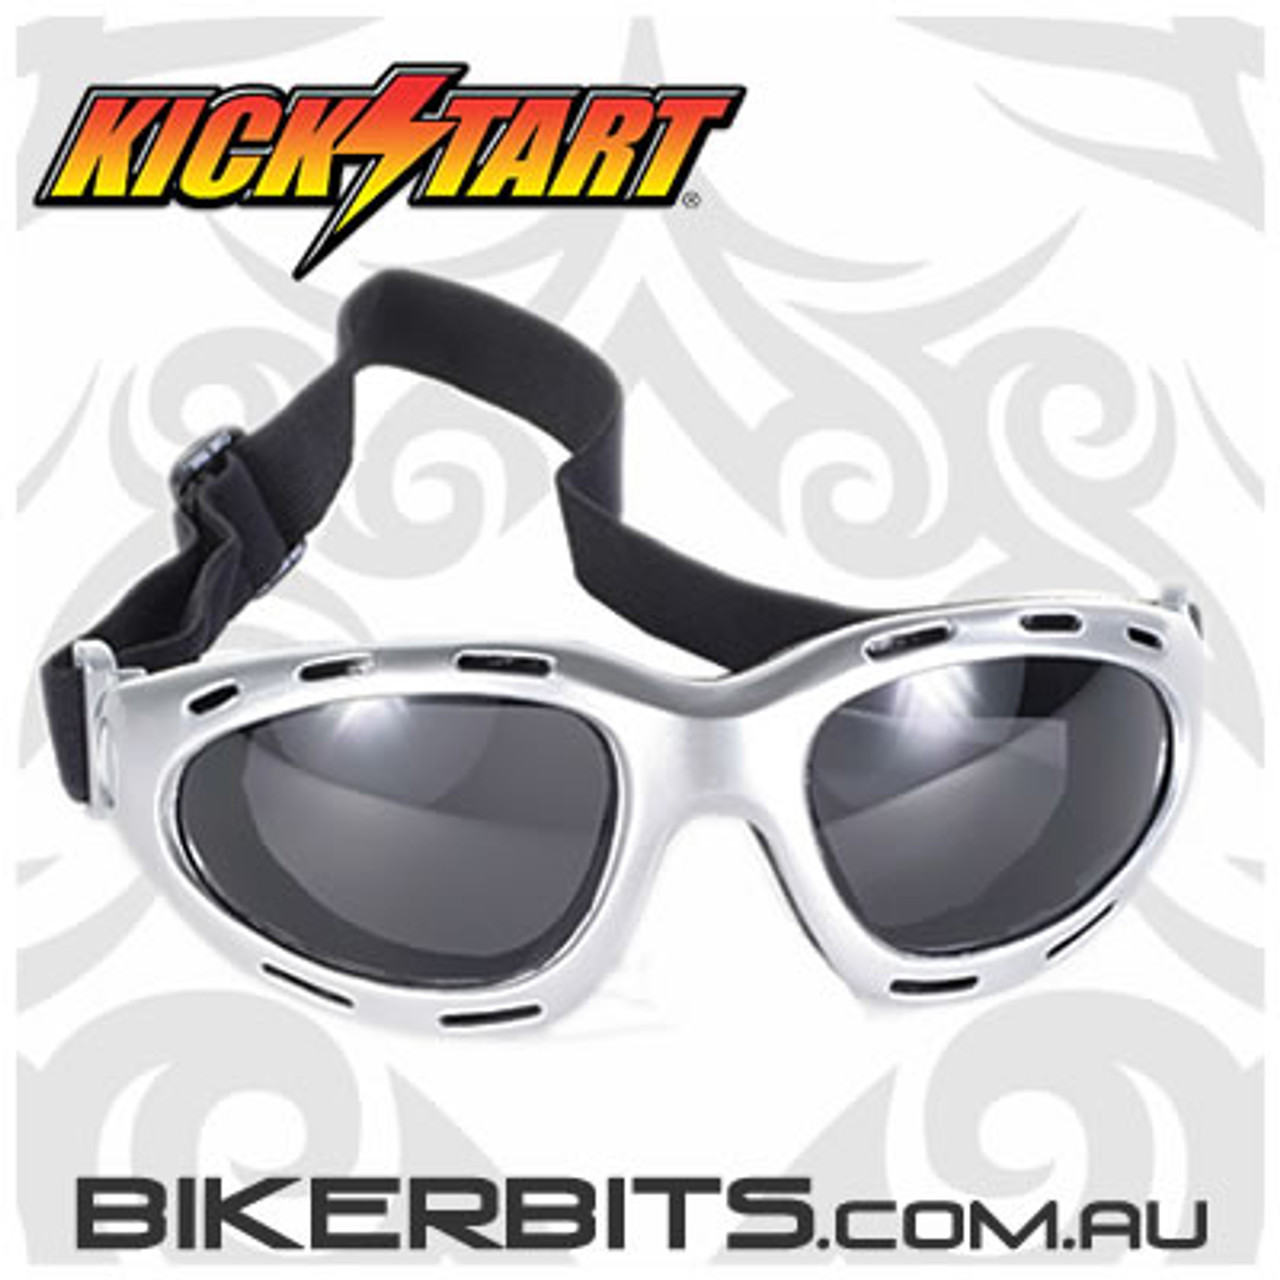 Goggles - Kickstart Dyno - Smoke/Silver